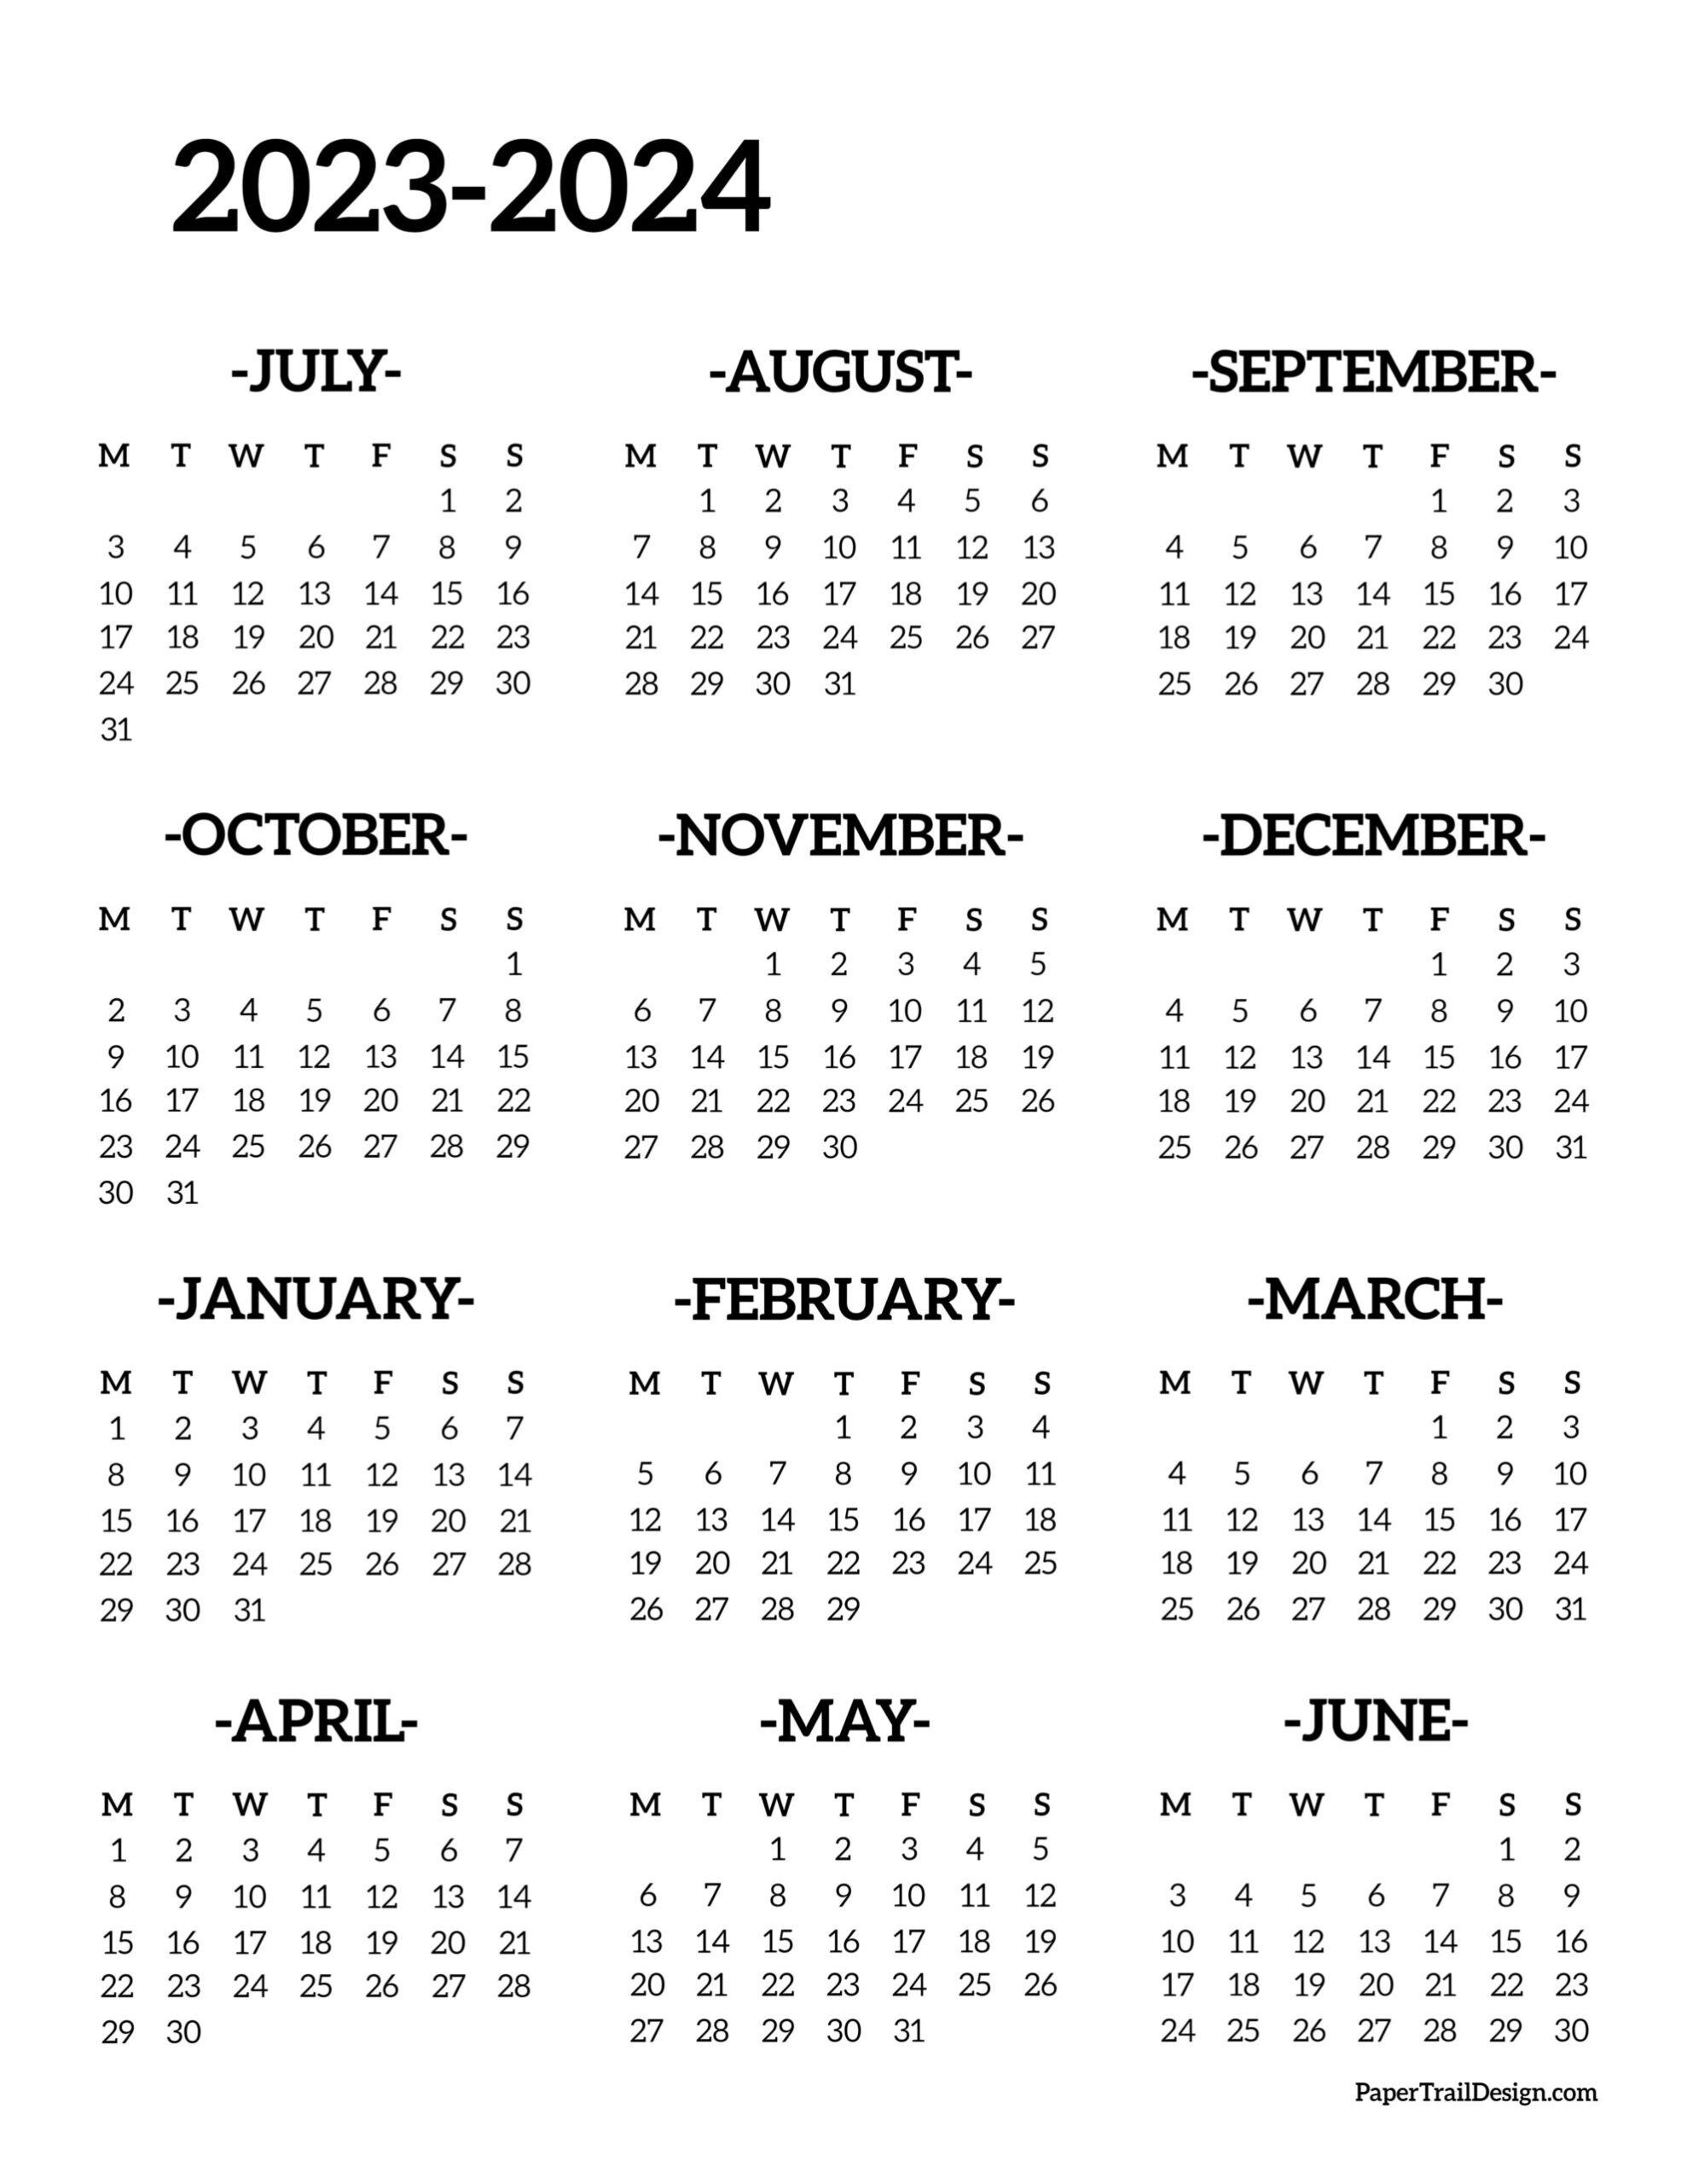 2023-2024 School Year Calendar Free Printable - Paper Trail Design in Calendar June 2023 To May 2024